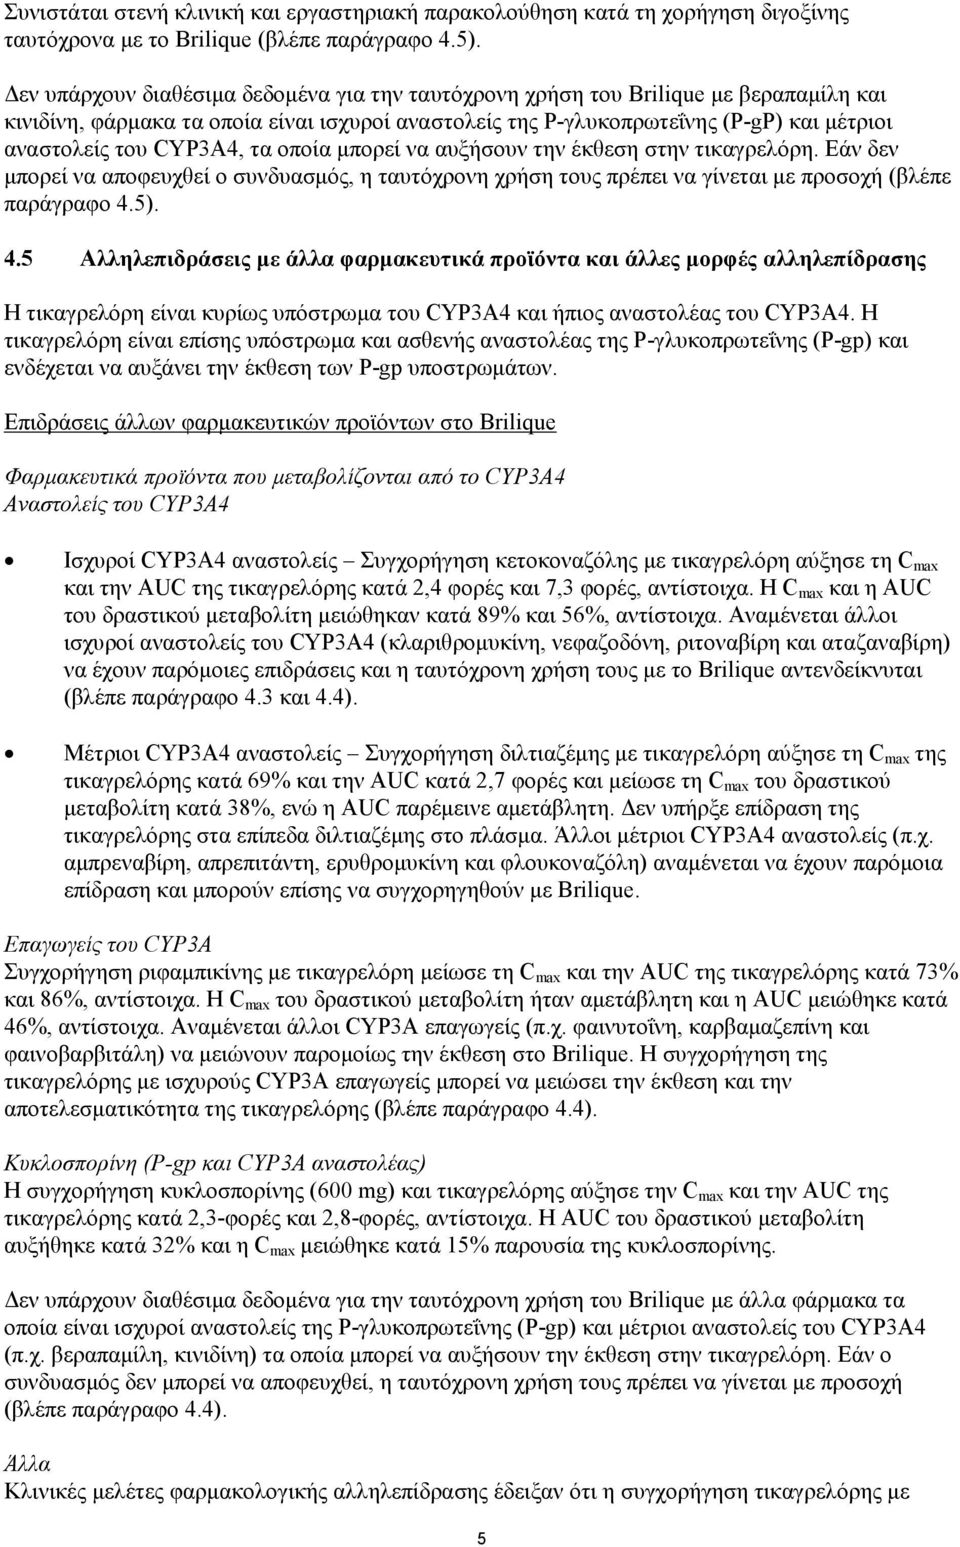 CYP3A4, τα οποία μπορεί να αυξήσουν την έκθεση στην τικαγρελόρη. Εάν δεν μπορεί να αποφευχθεί ο συνδυασμός, η ταυτόχρονη χρήση τους πρέπει να γίνεται με προσοχή (βλέπε παράγραφο 4.